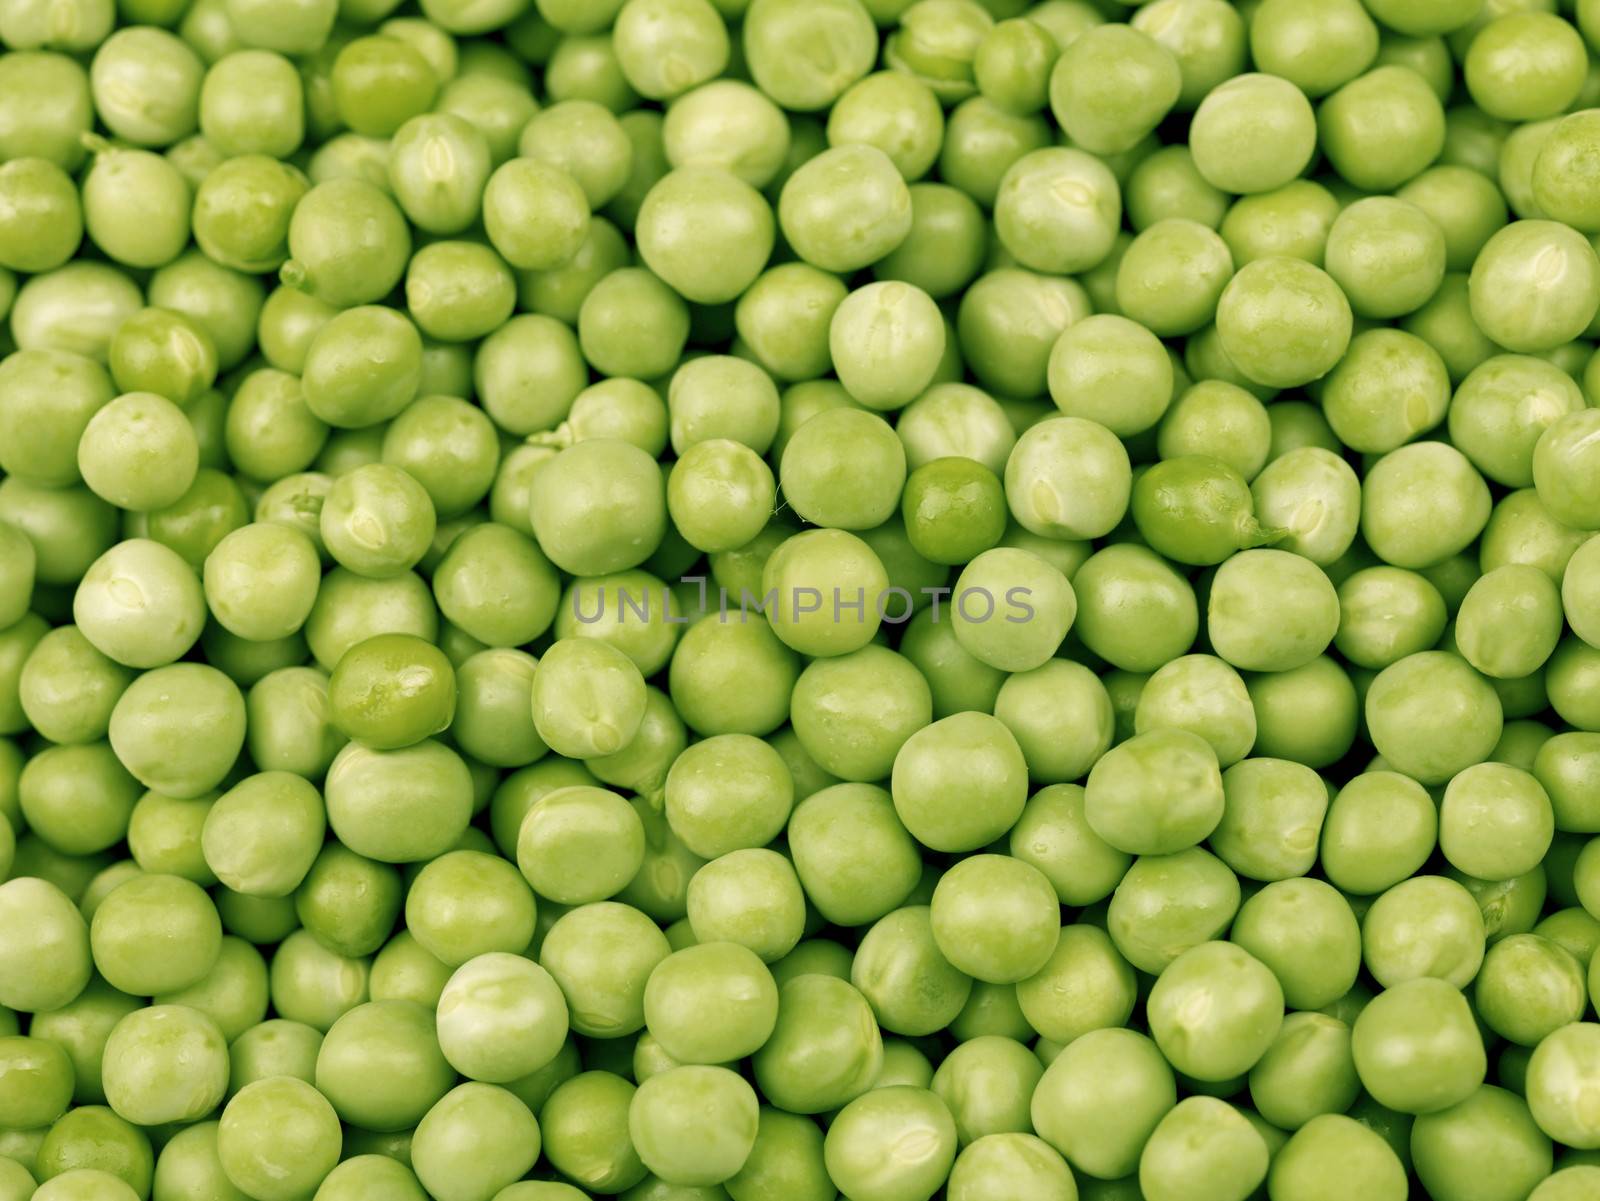 Green Peas by Whiteboxmedia